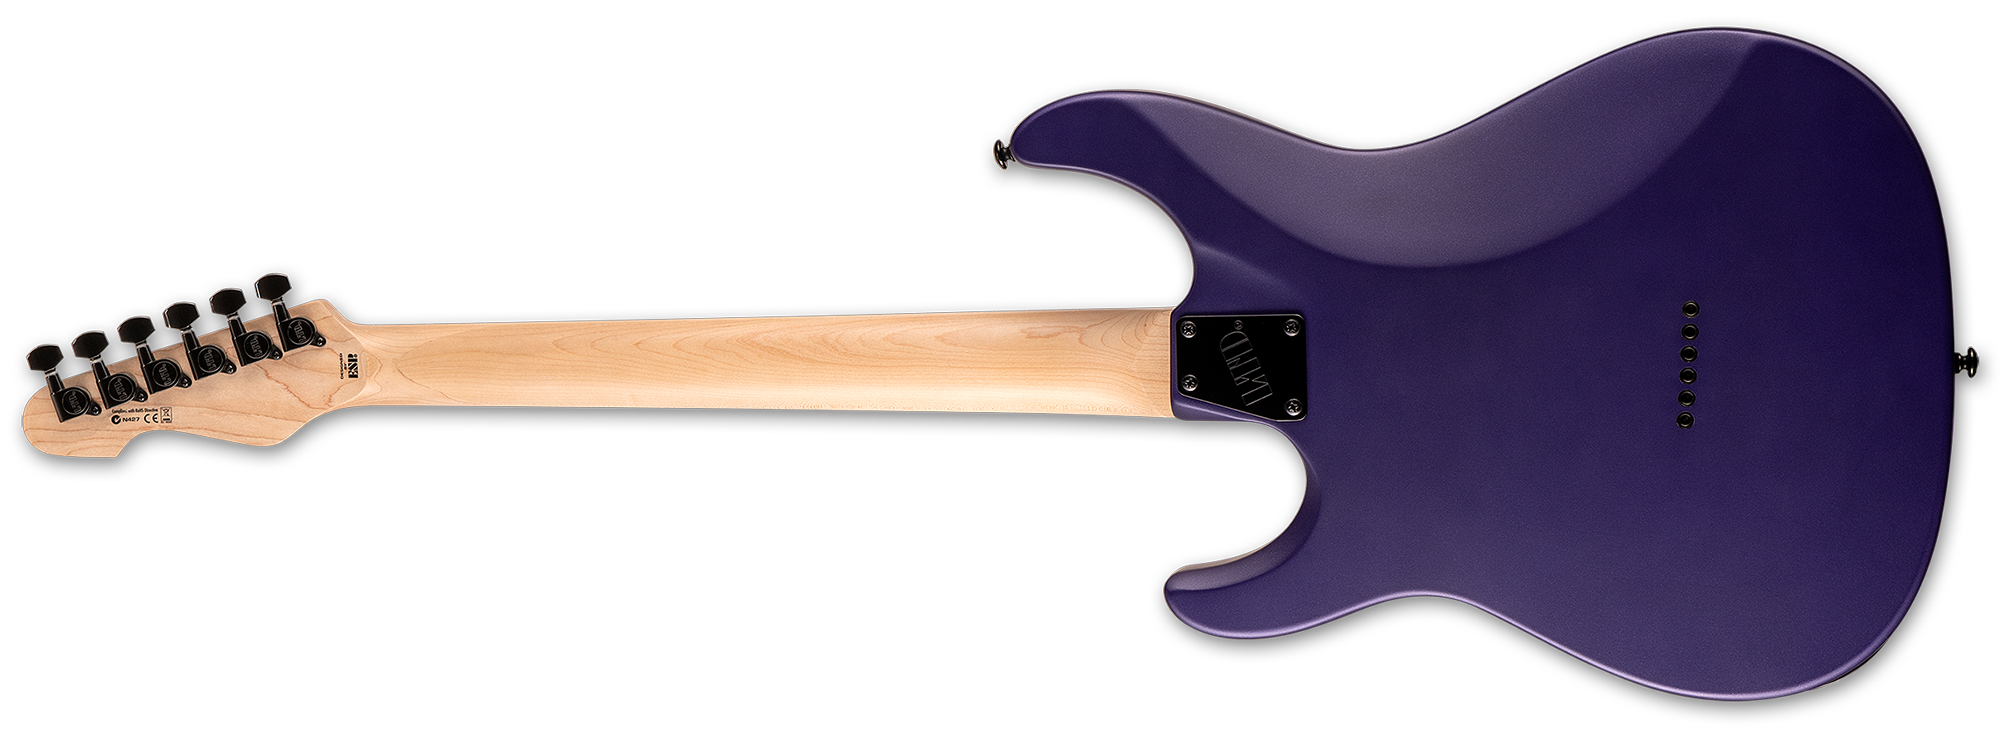 Ltd Sn-200ht Hh Ht Mn - Dark Metallic Purple Satin - Str shape electric guitar - Variation 2